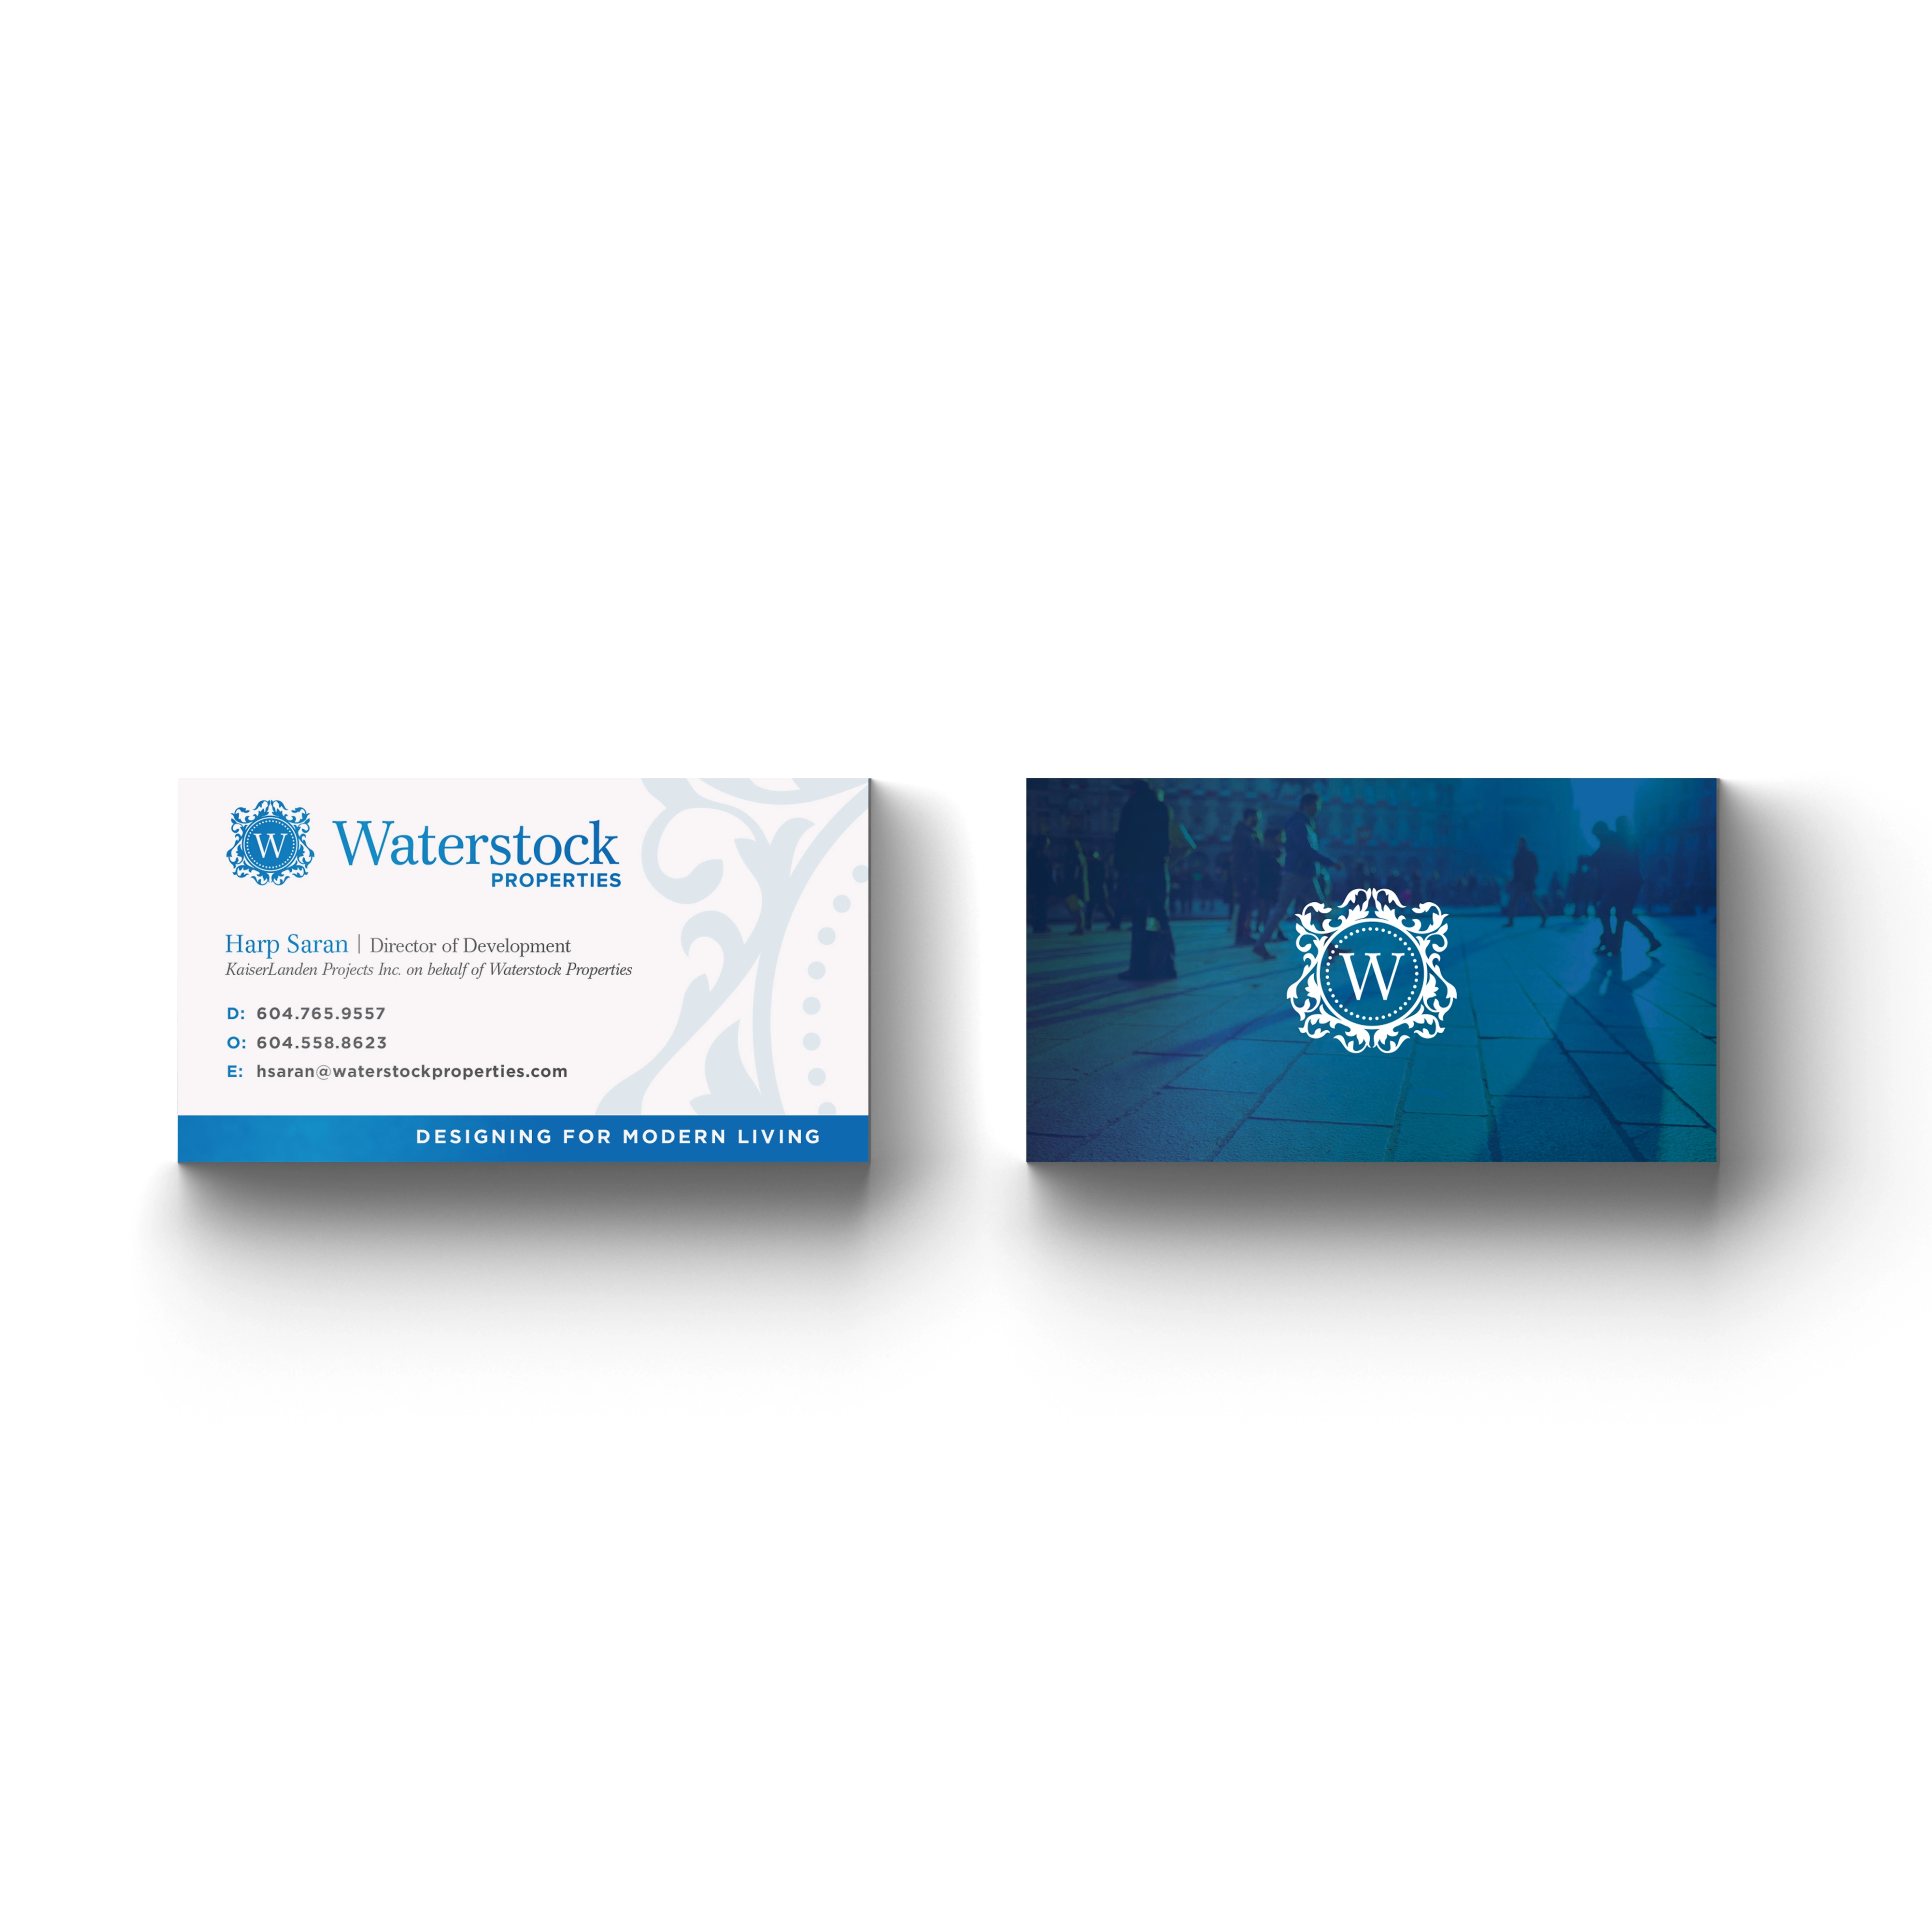 403-waterstock-business-card-mockup.jpg